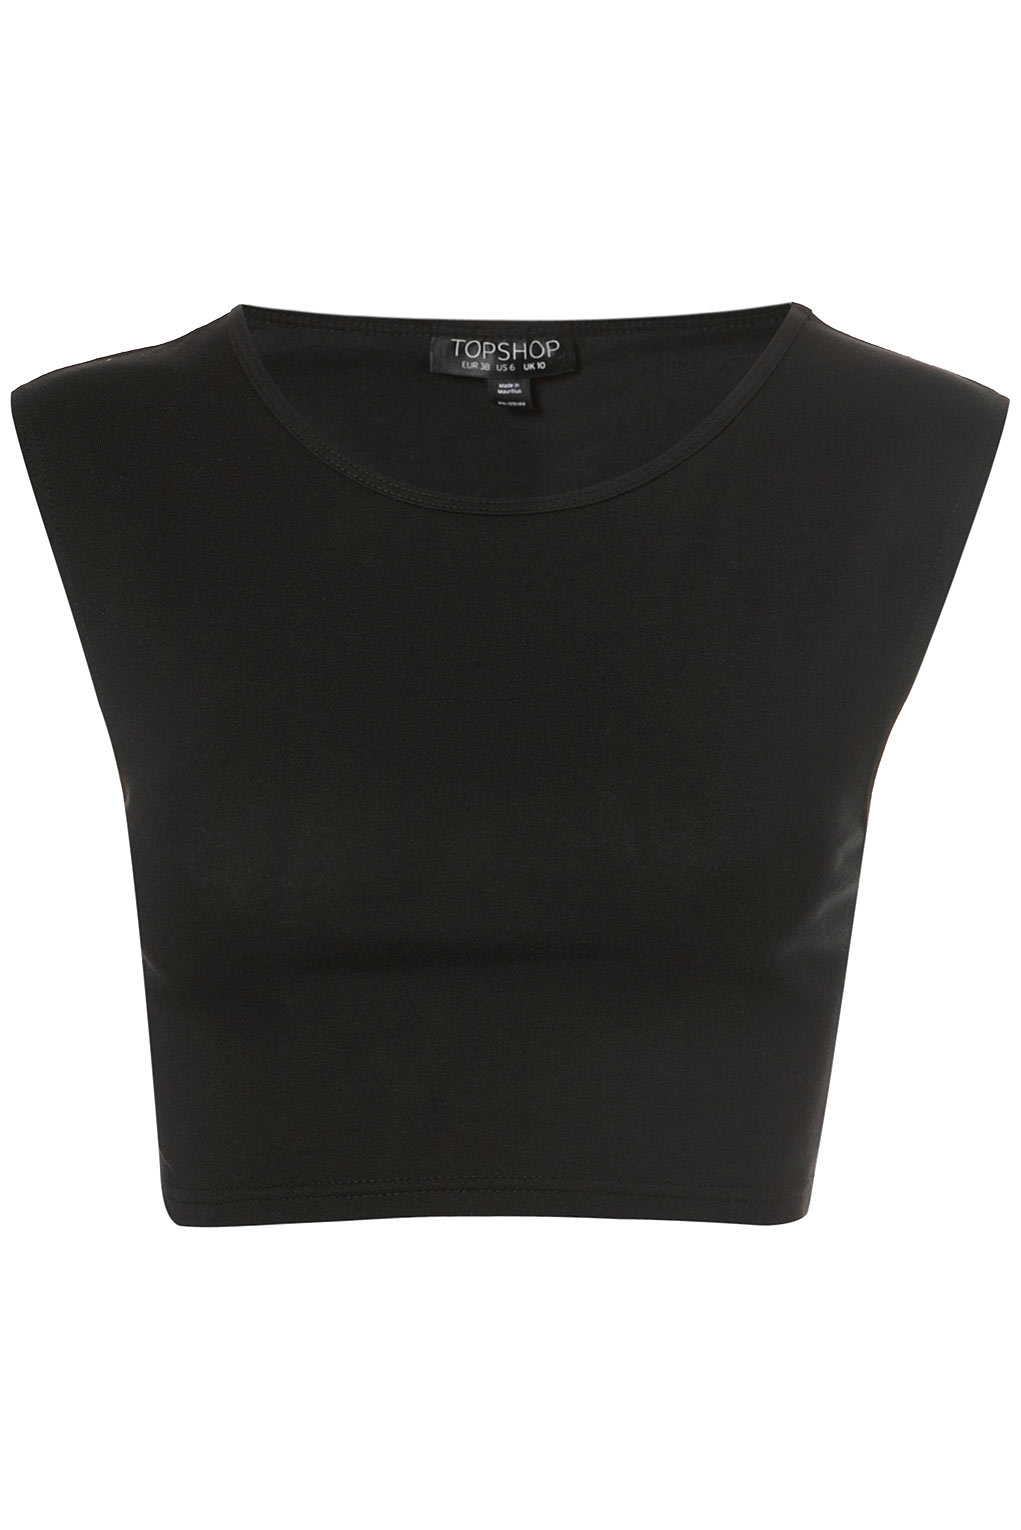 TOPSHOP Basic Short Sleeve Crop Top in Washed Black (Black) - Lyst